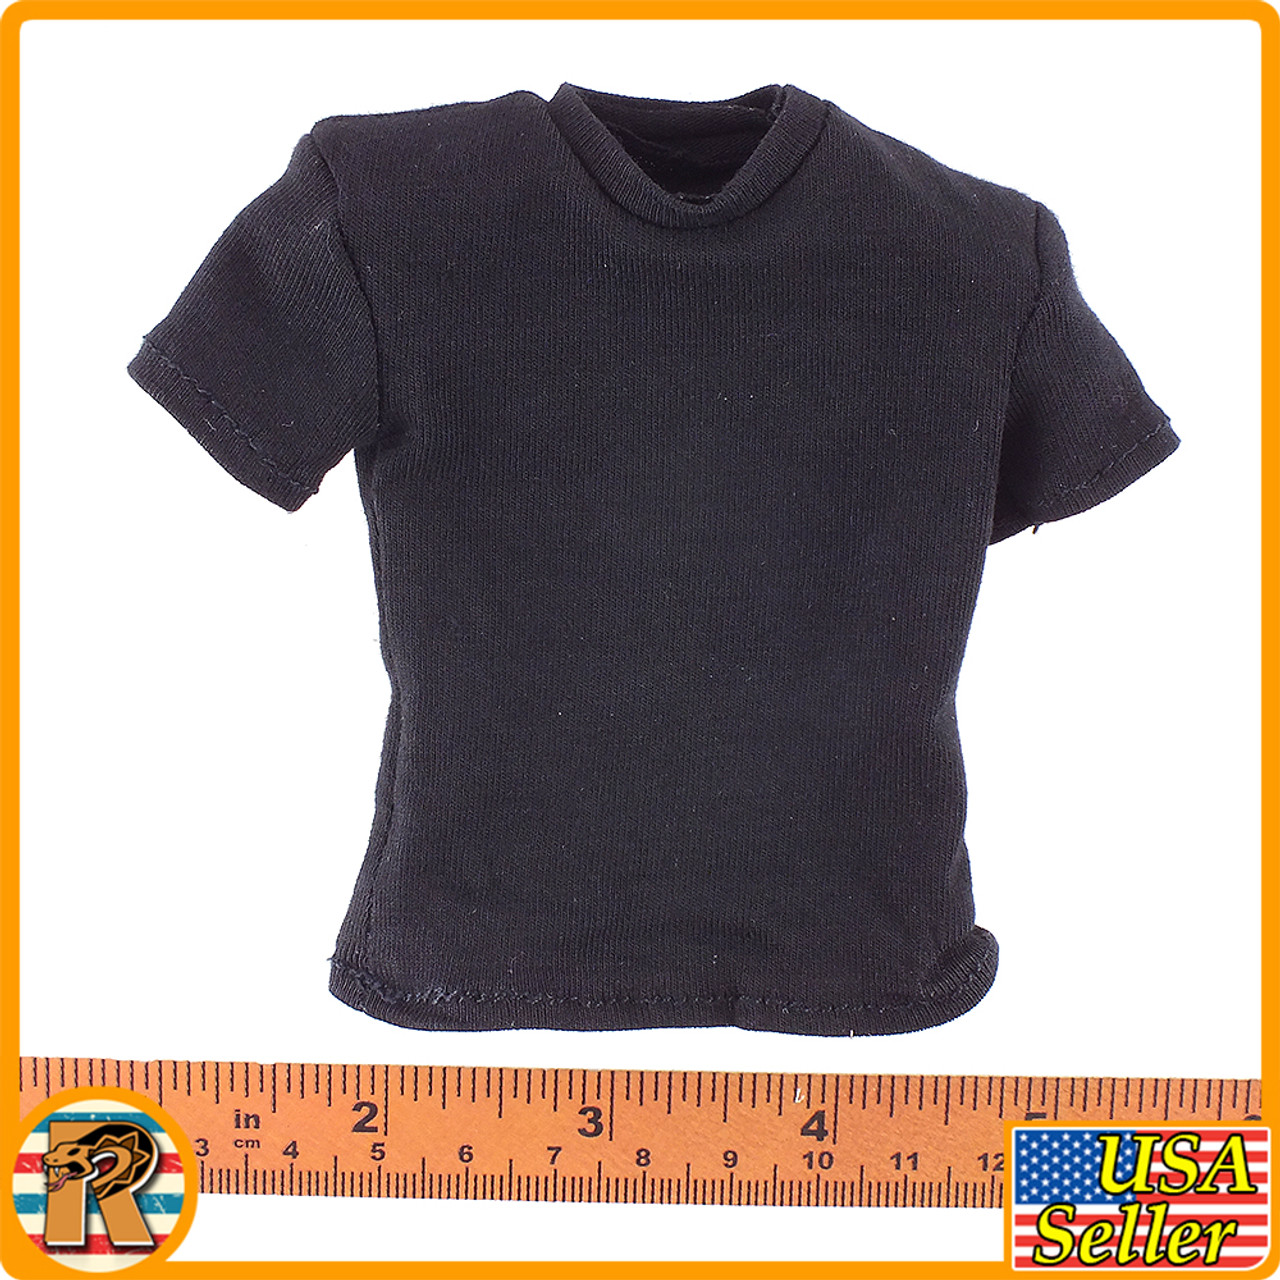 Nick Hard Boiled Sheriff - Black T Shirt - 1/6 Scale -